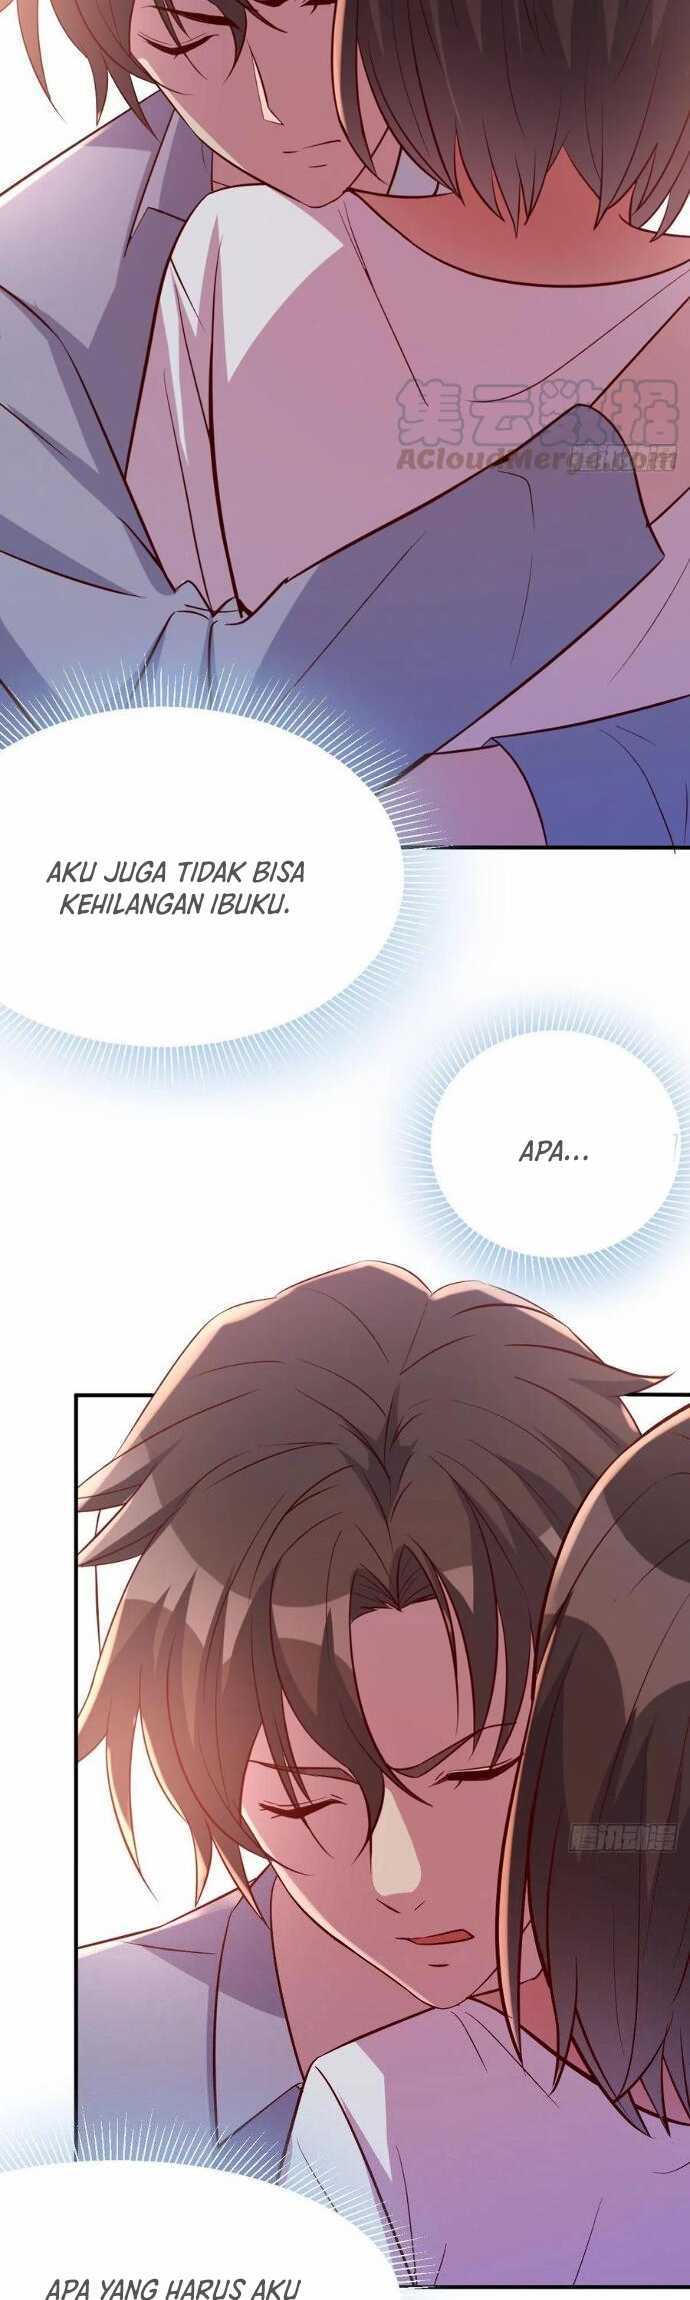 Rental Boyfriend Chapter 17 bahasa indonesia